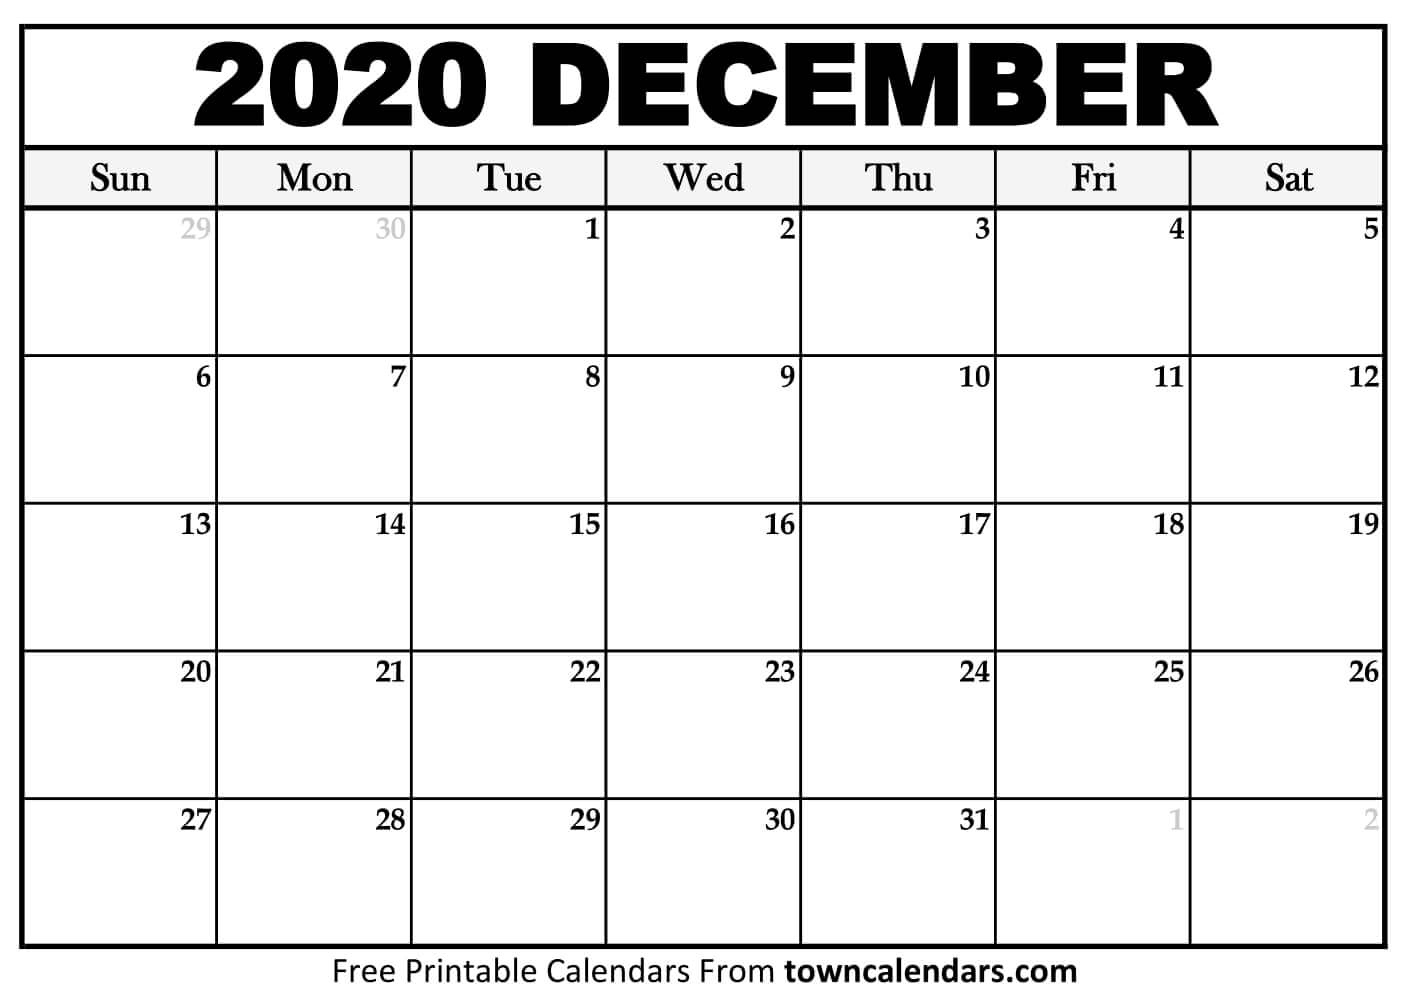 Printable December 2020 Calendar - Towncalendars September 2020-December 2021 Calendar